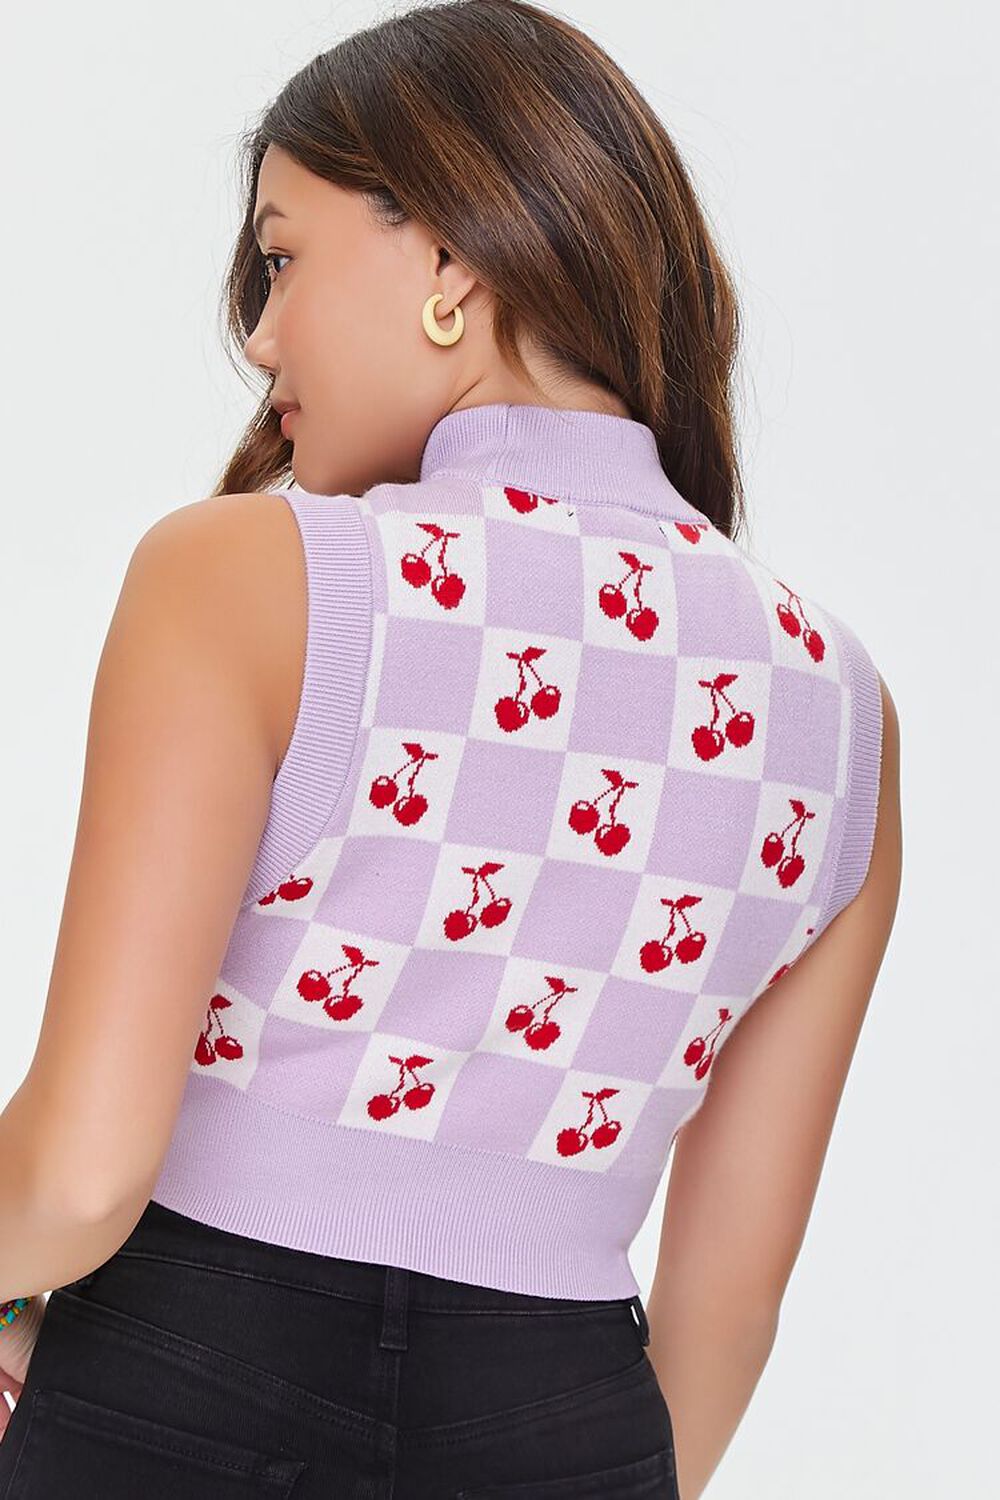 PURPLE/MULTI Cherry Checkered Sweater Vest, image 3